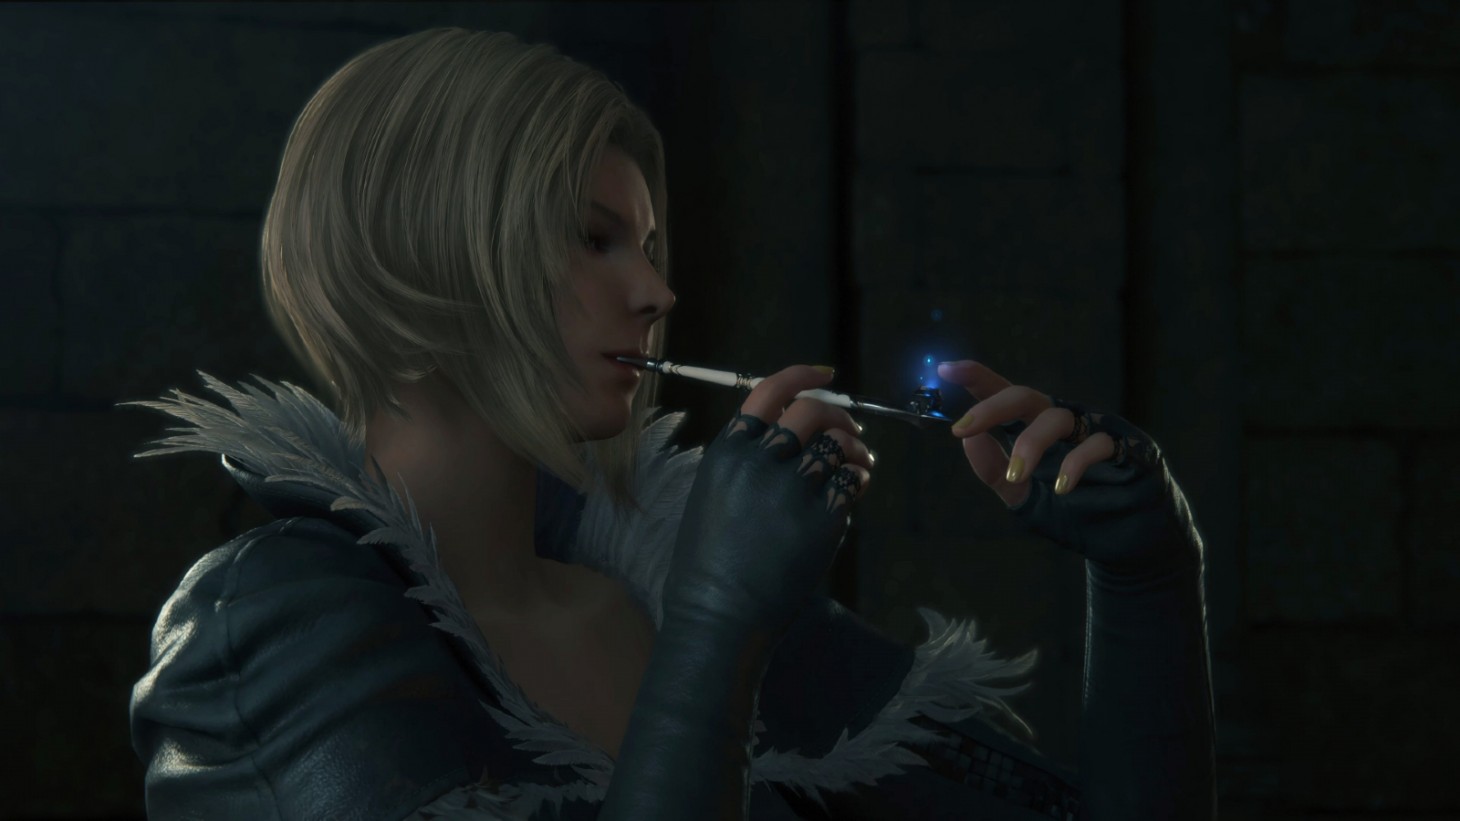 Final Fantasy XVI Producer Sets Social Media On Fire: “I wish